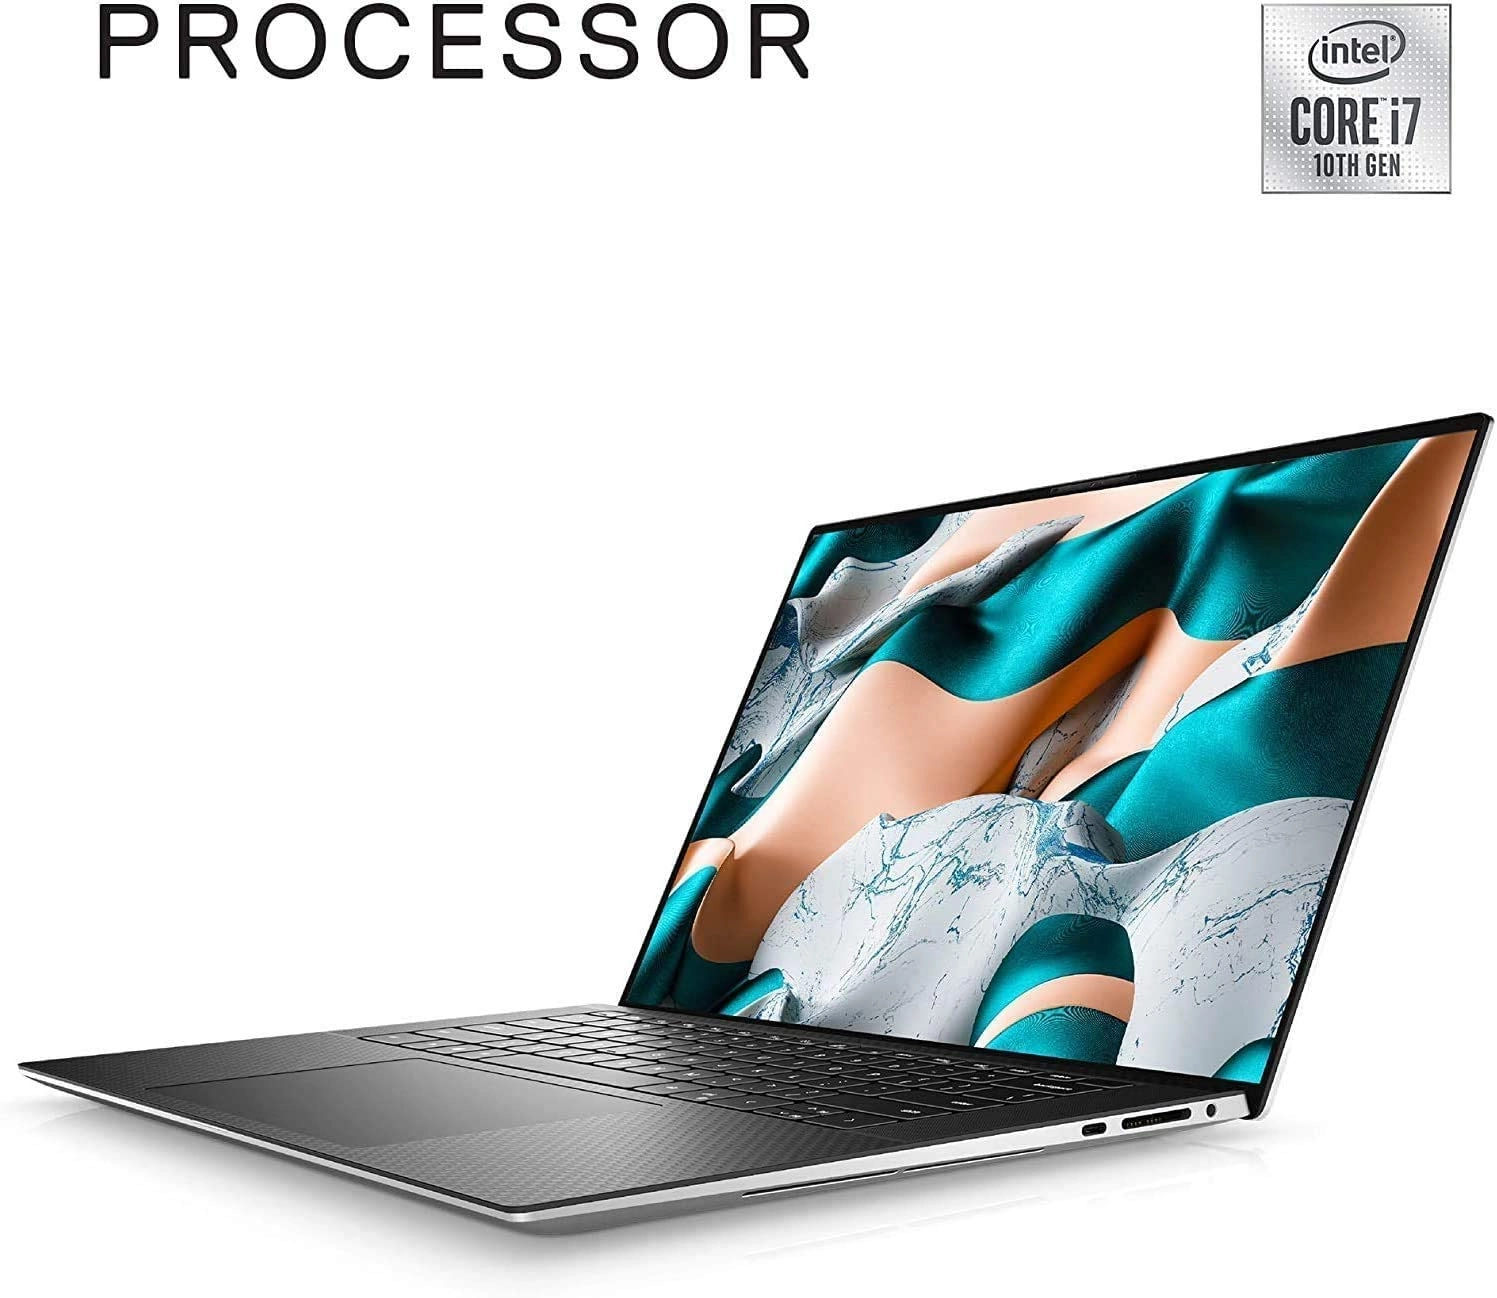 Dell XPS 15 9500 laptop image